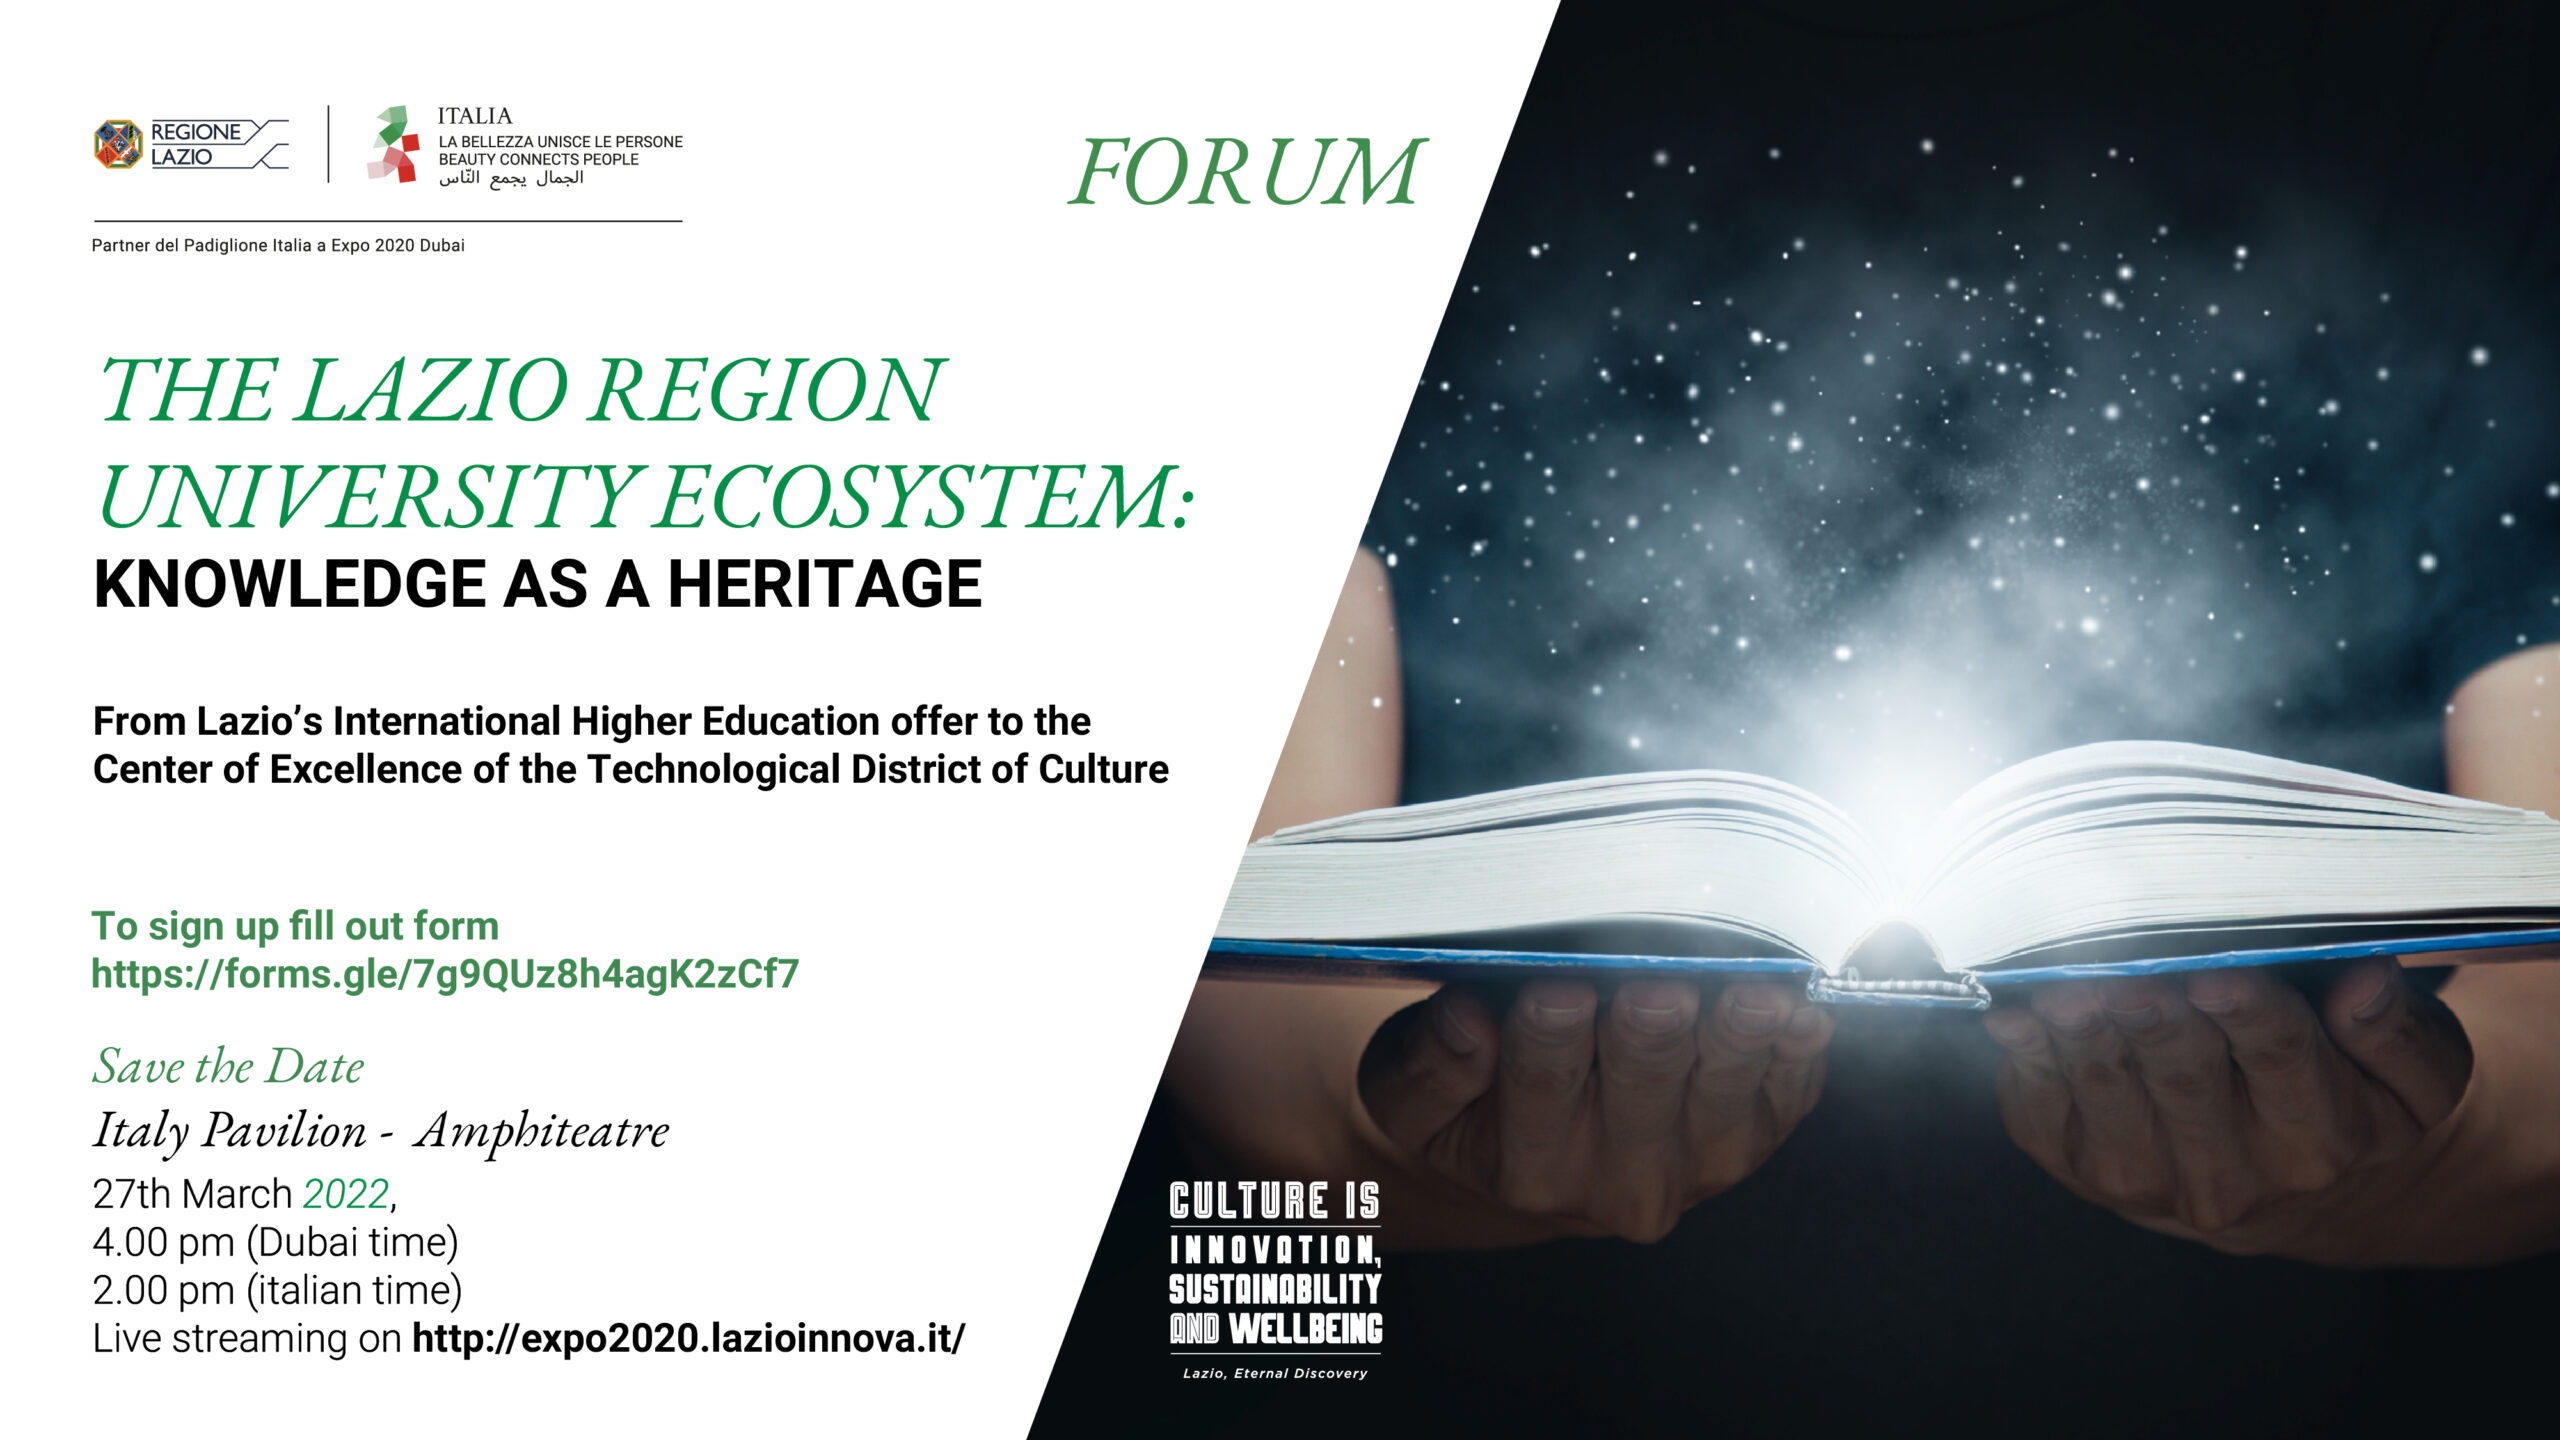 The Lazio Region University Ecosystem: Knowledge as a heritage